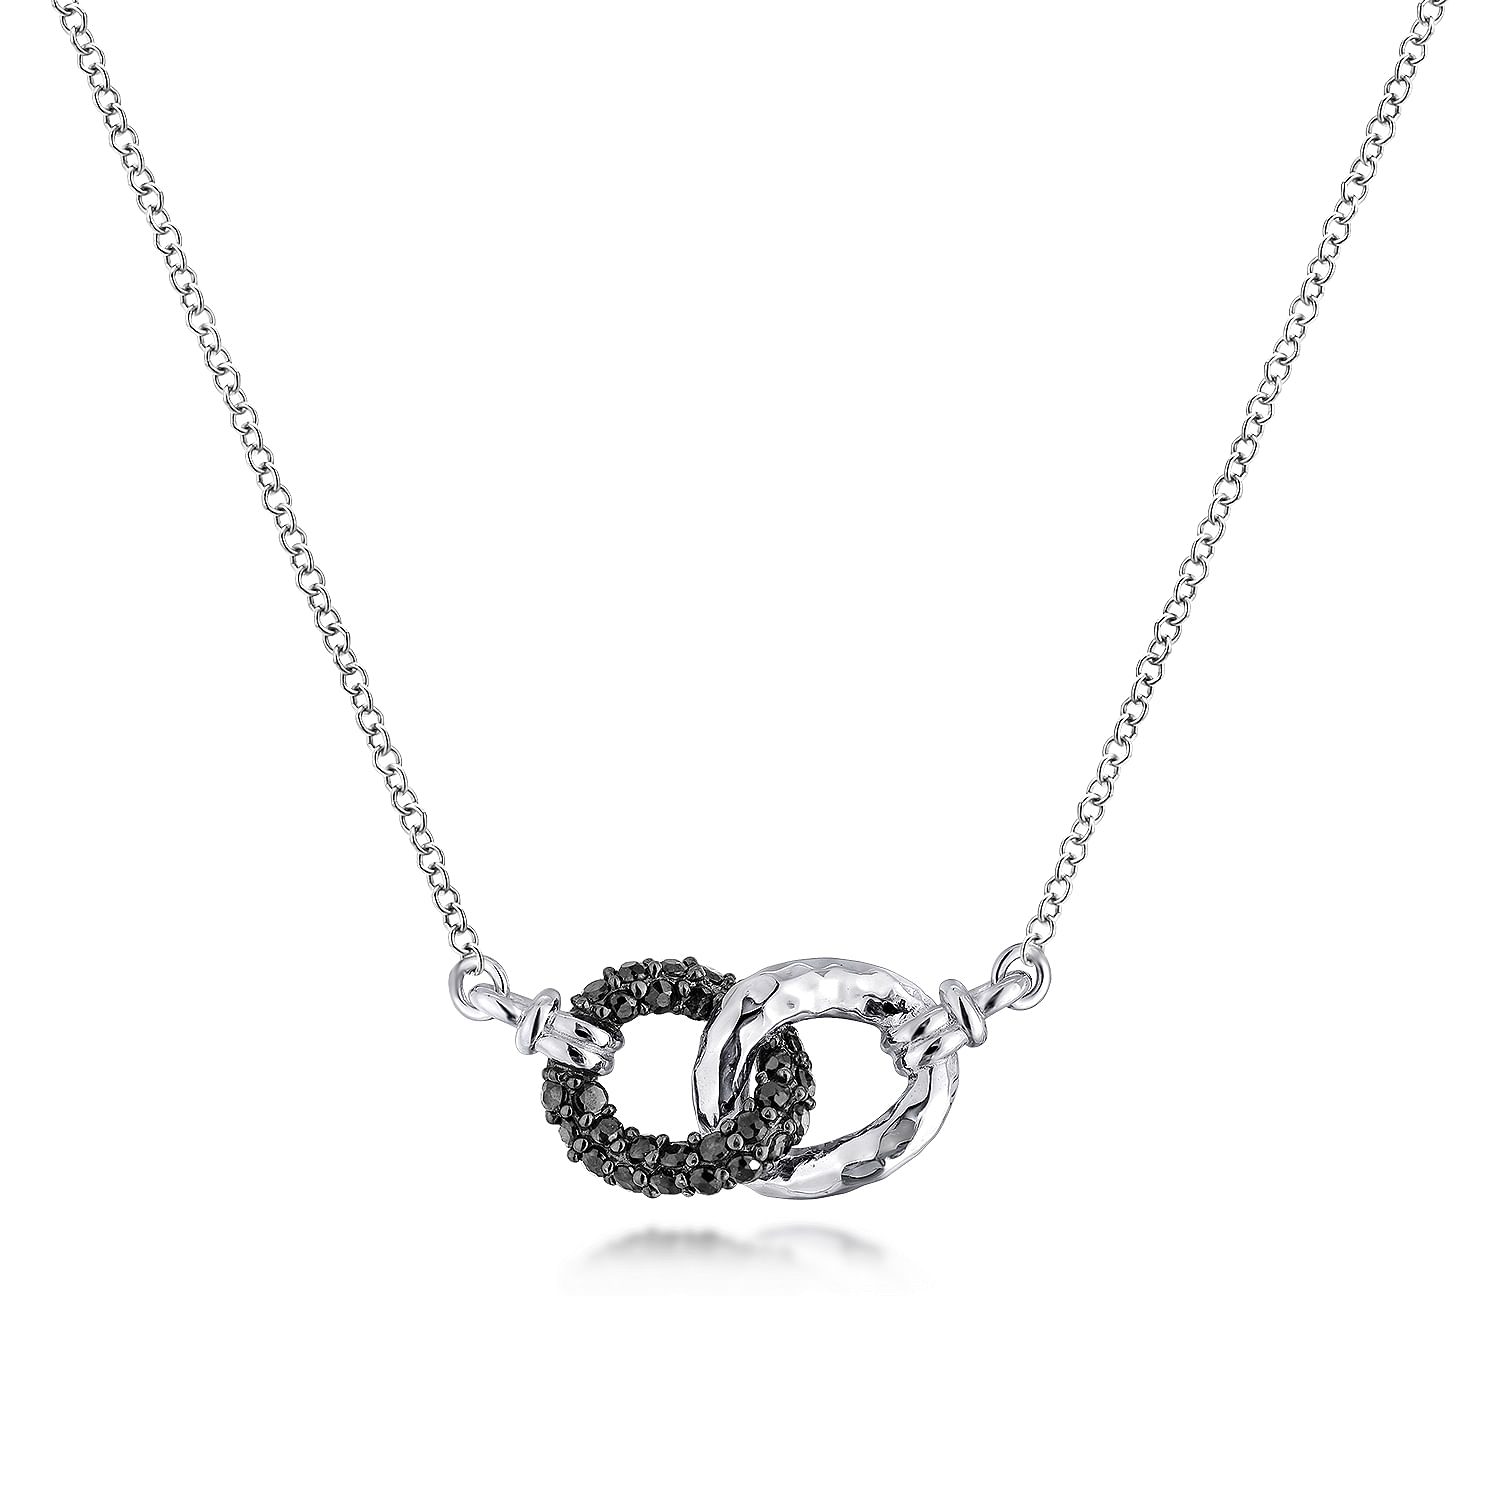 925 Sterling Silver and Black Spinel Interlocking Links Necklace